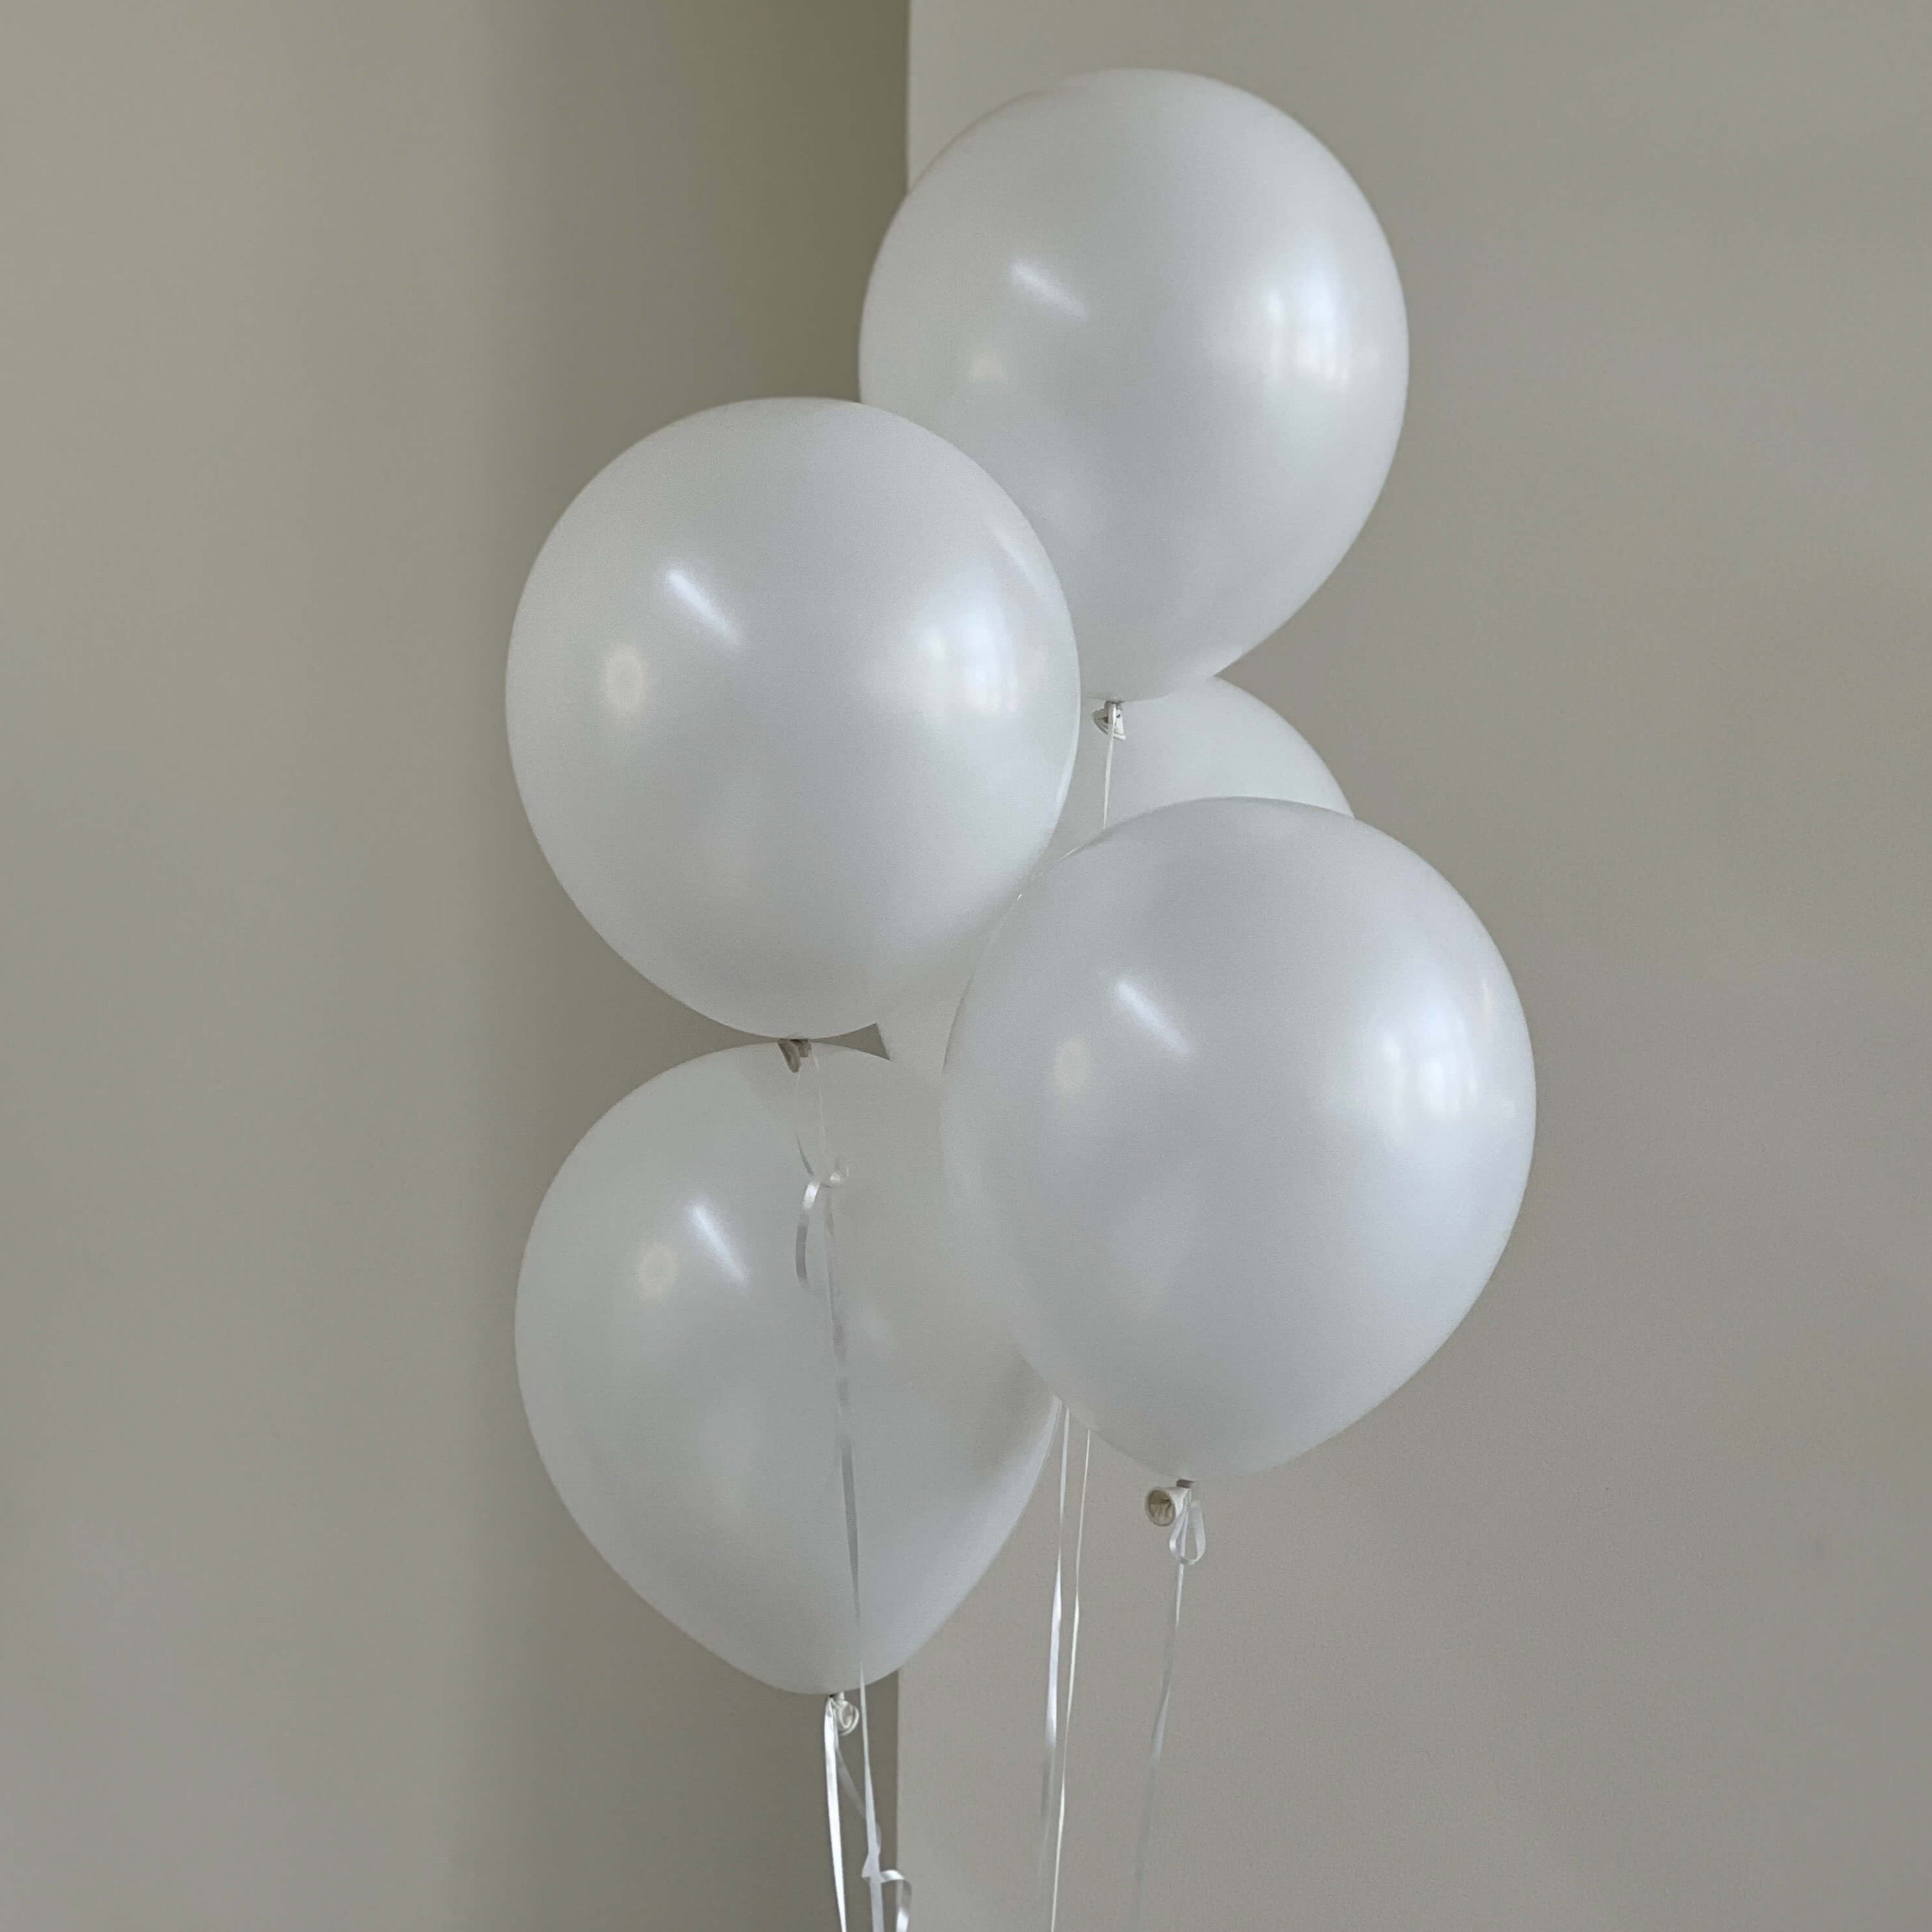 Ten Rubber Balloons